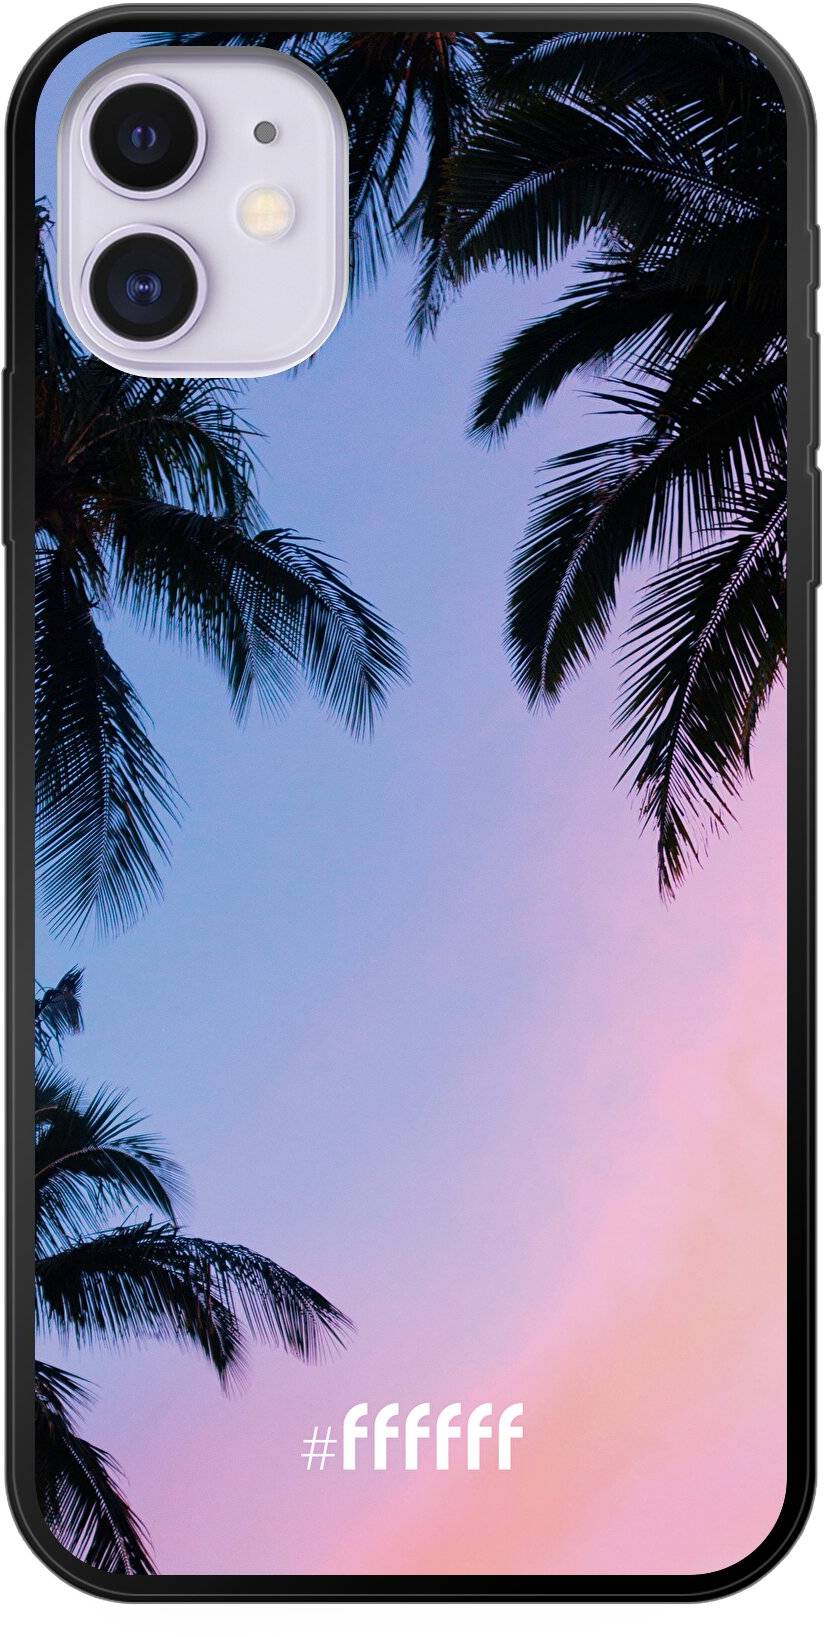 Sunset Palms iPhone 11